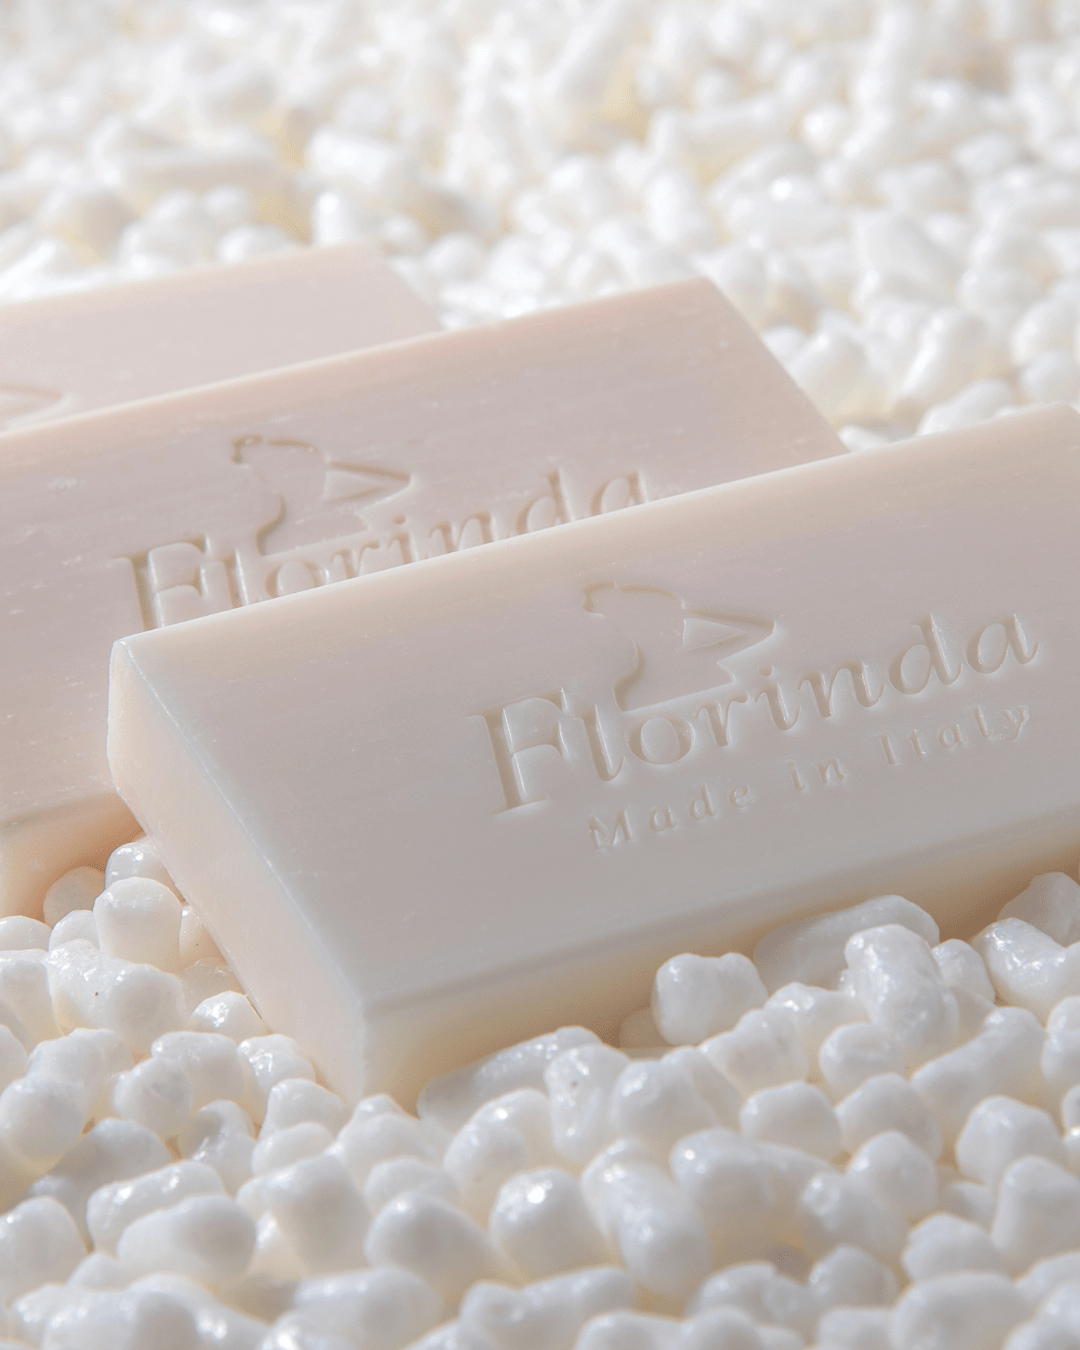 FLORINDA SOAP PRODUCTION 2 (2)